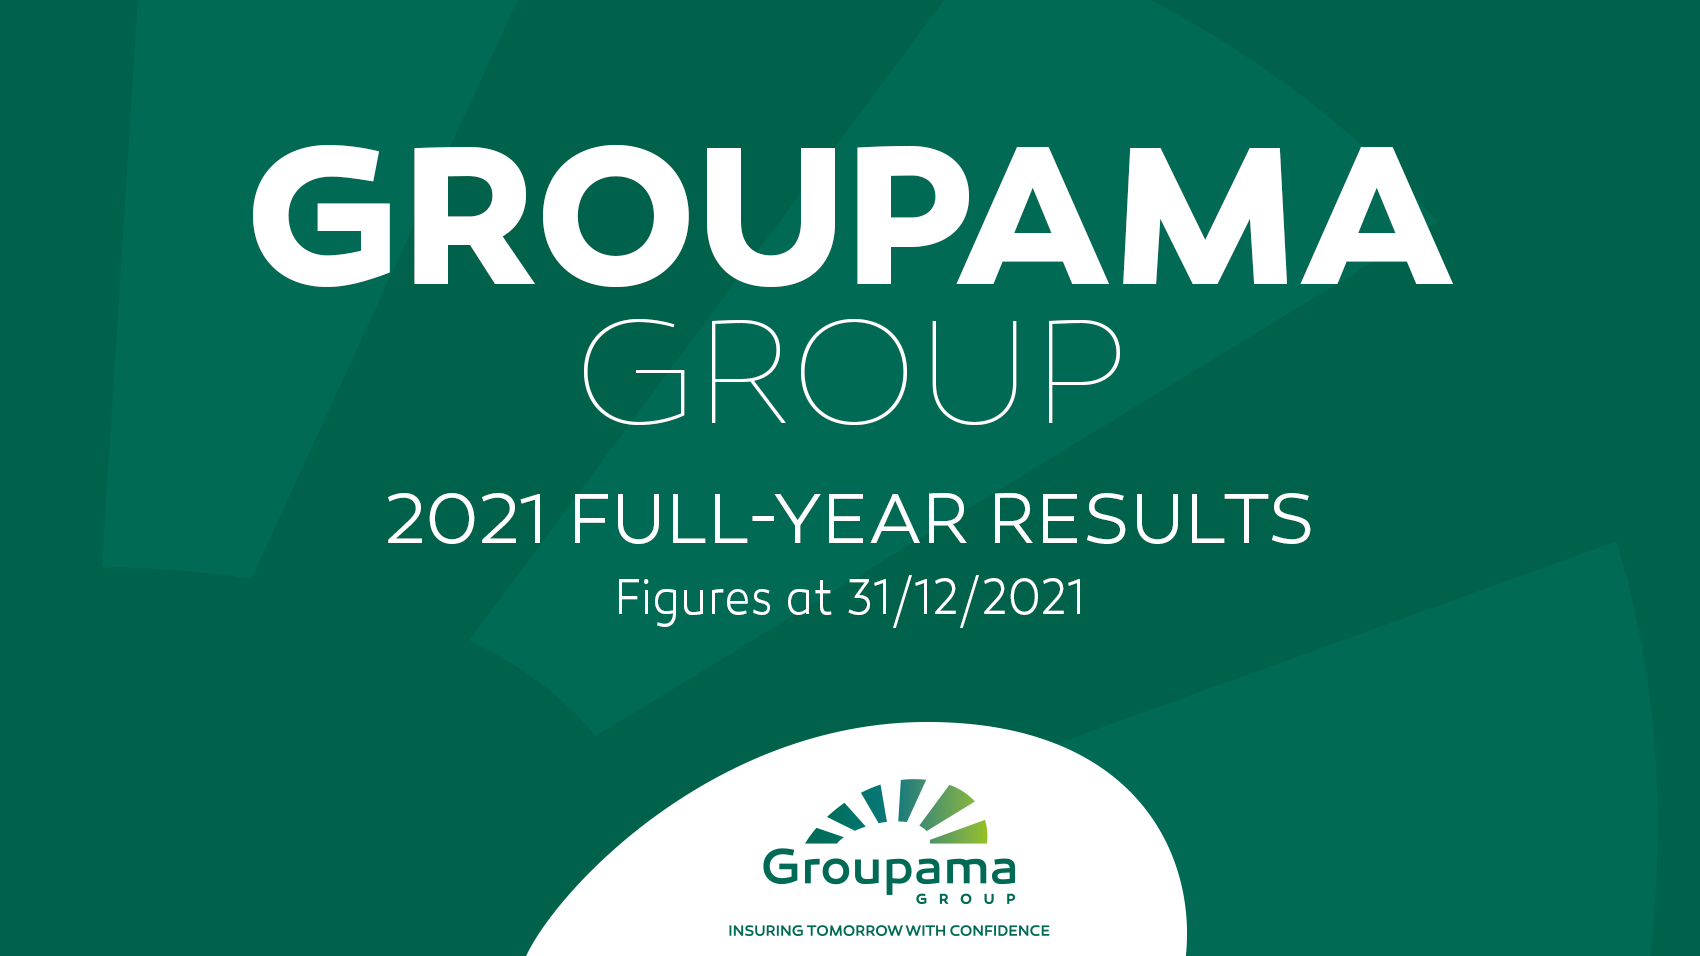 00 Groupama Group